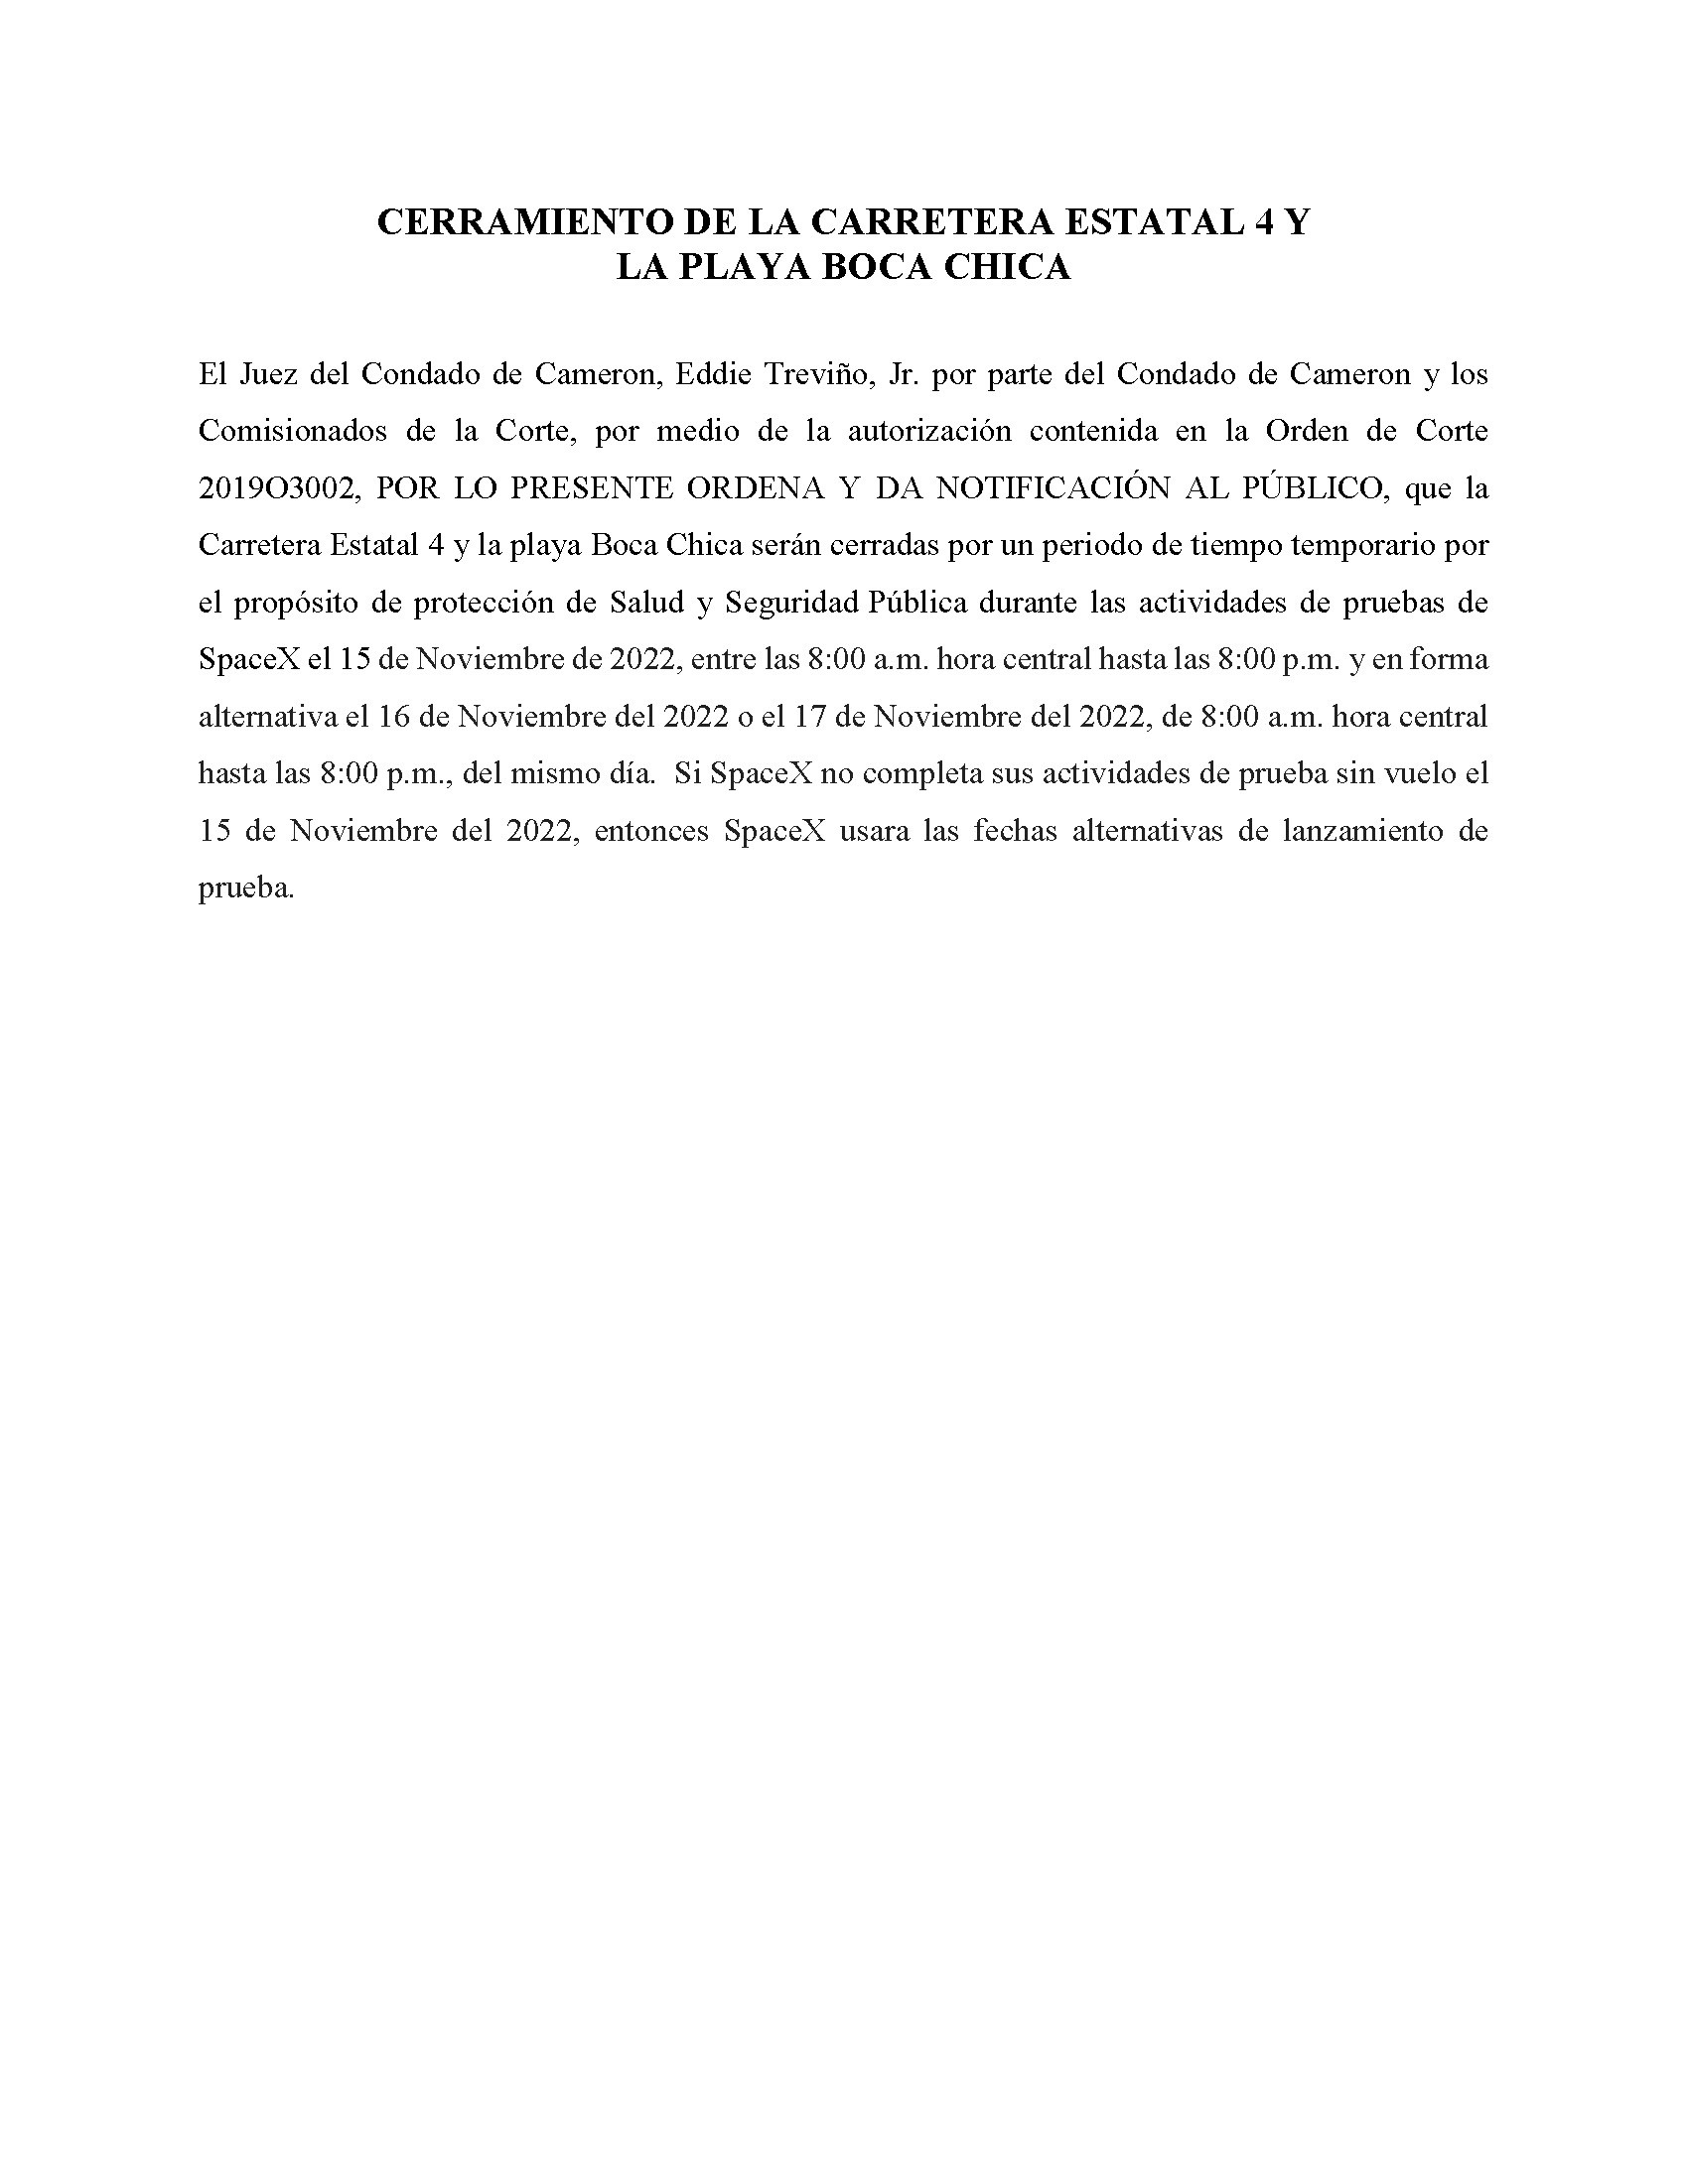 ORDER.CLOSURE OF HIGHWAY 4 Y LA PLAYA BOCA CHICA.SPANISH.11.15.2022